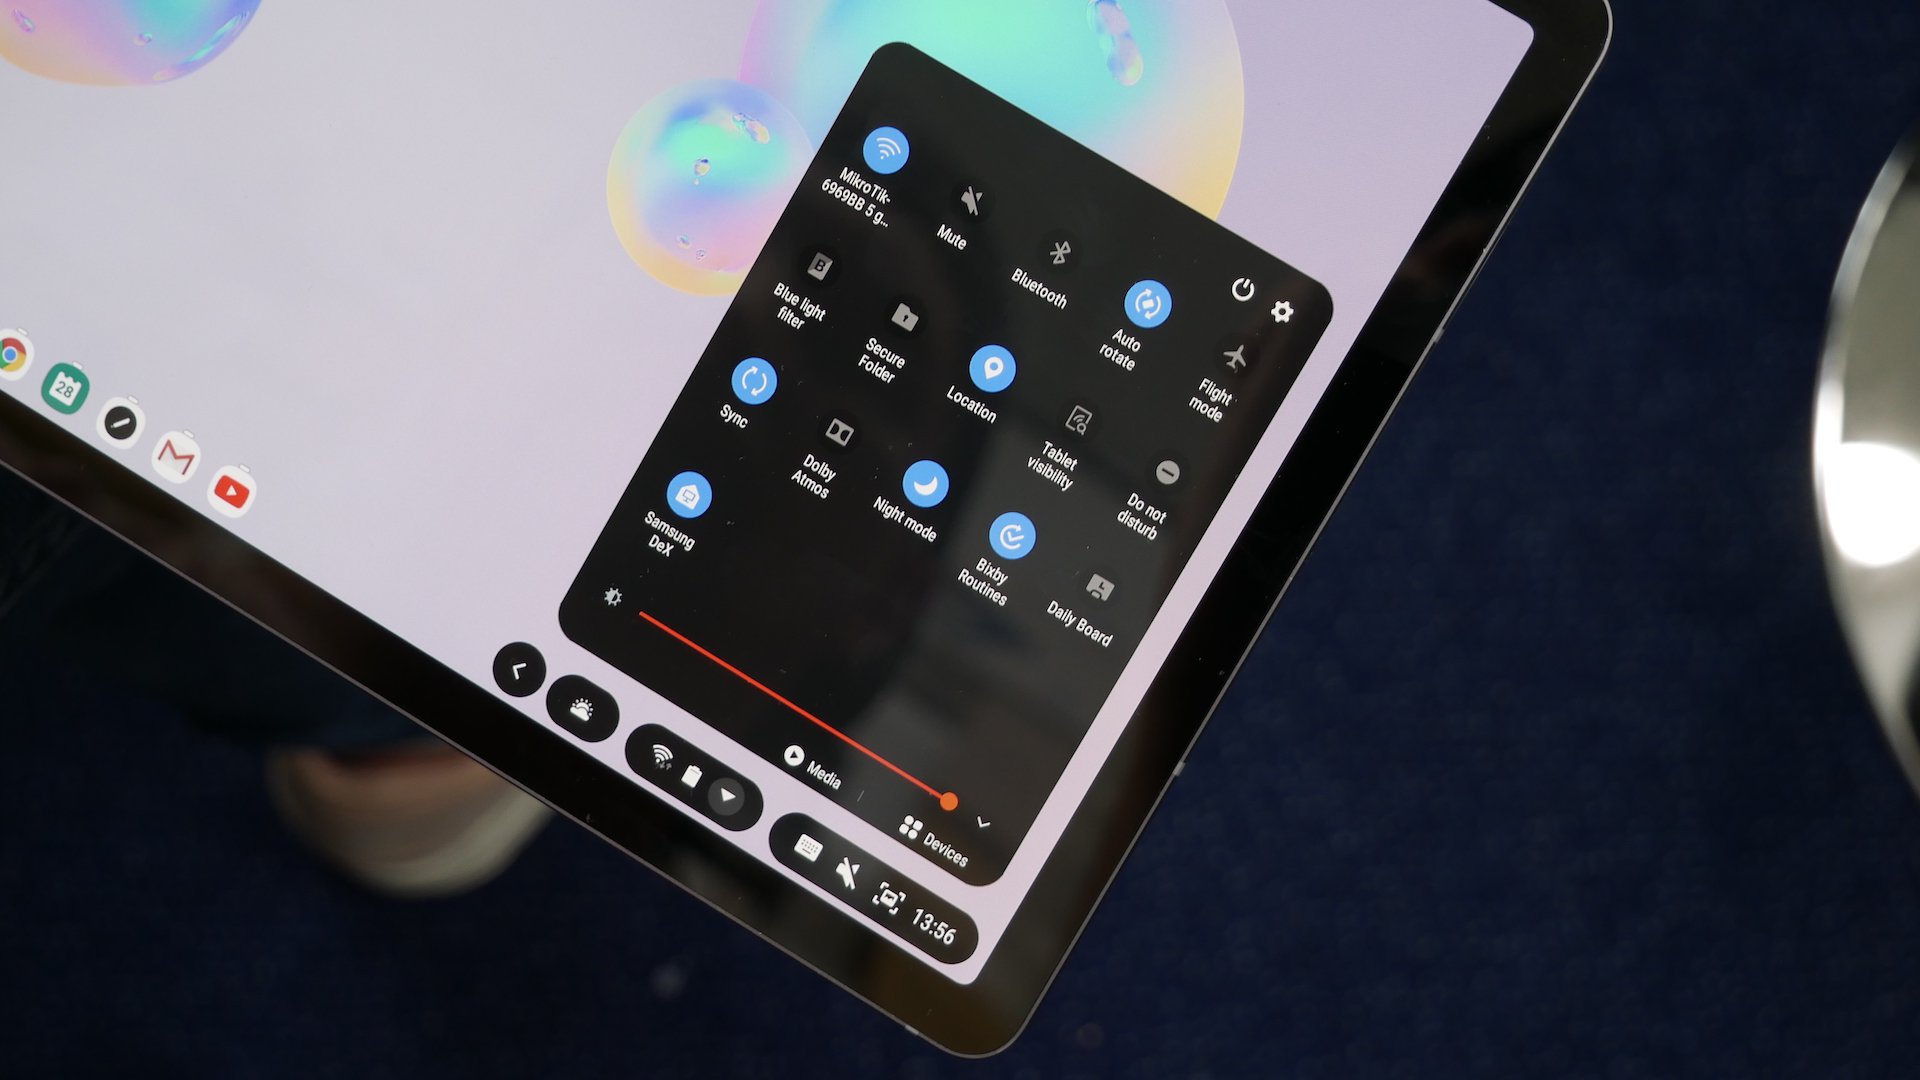 Samsung Galaxy Tab S6 incelemesi: 2019'daki en iyi Android tablet 11